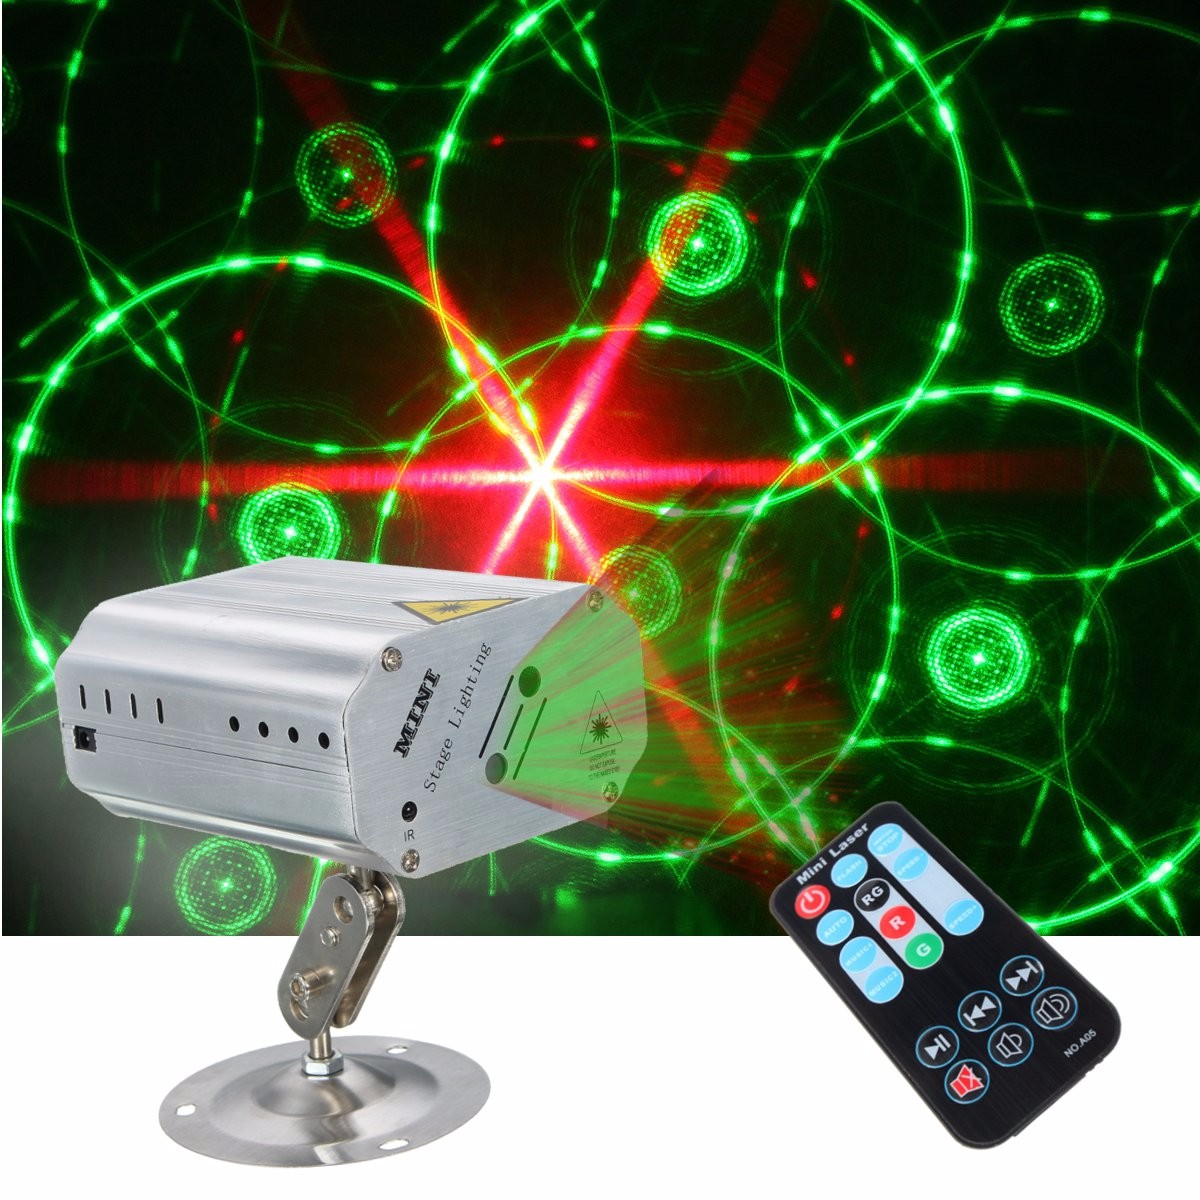 

Mini R&G Auto/Sound LED Stage Light Laser Projector Xmas DJ Party Club Lamp + Remote AC110-240V